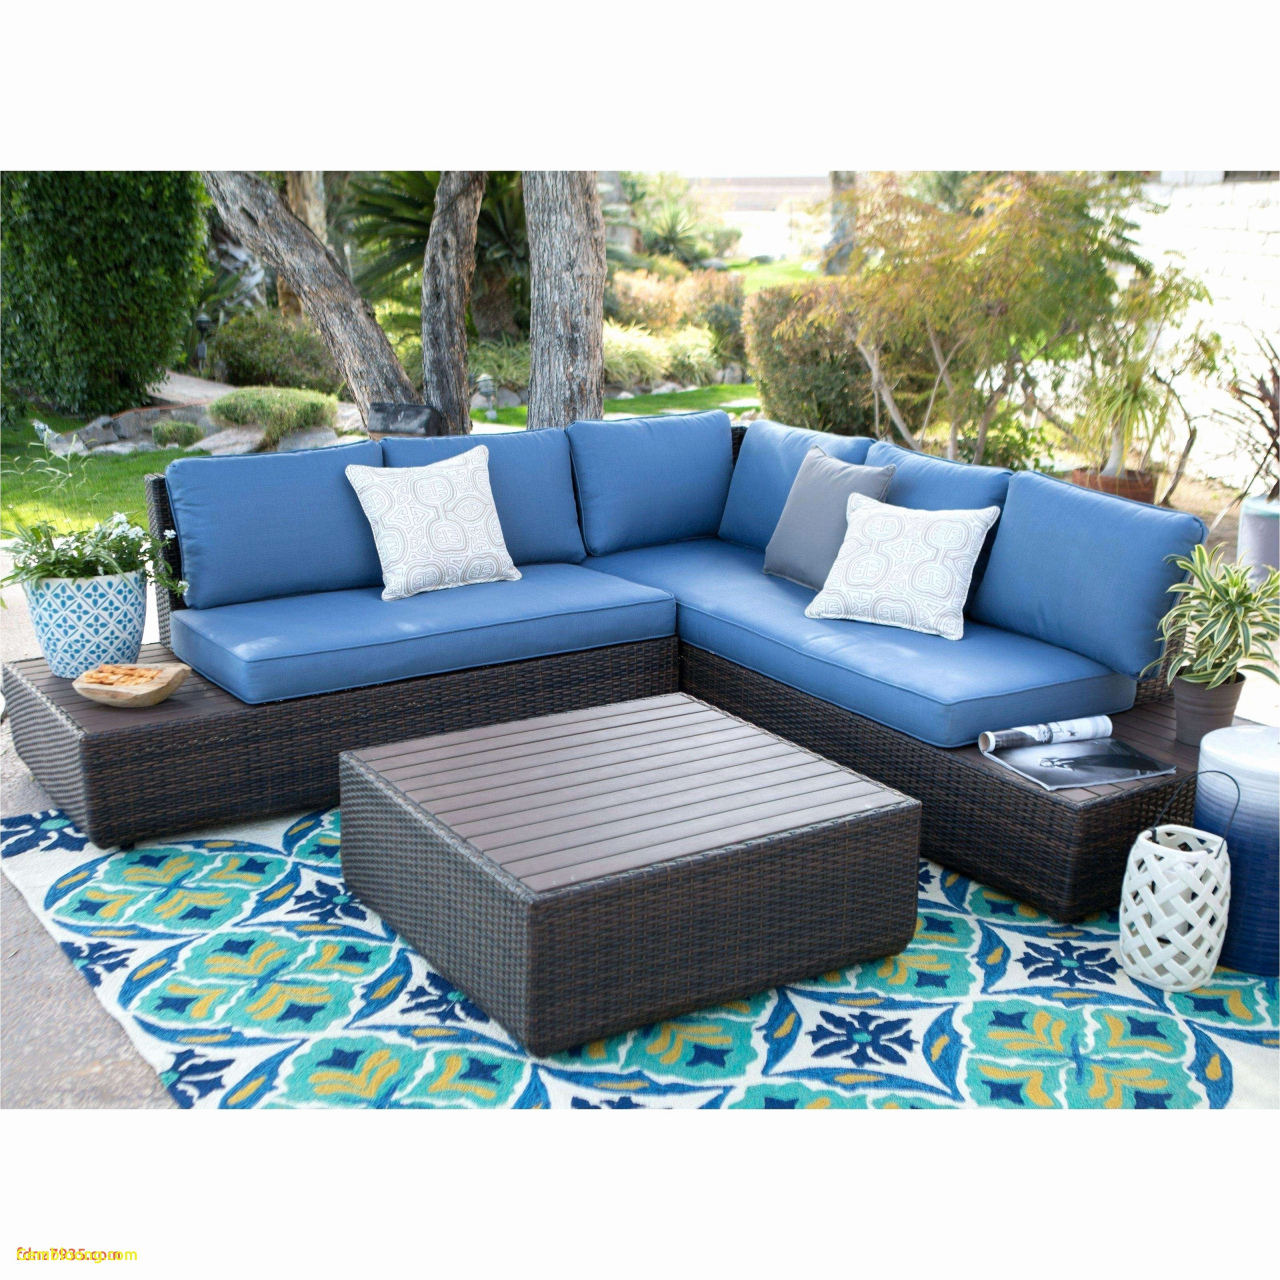 patio daybed 30 elegant costco outdoor patio furniture ideas durch patio daybed